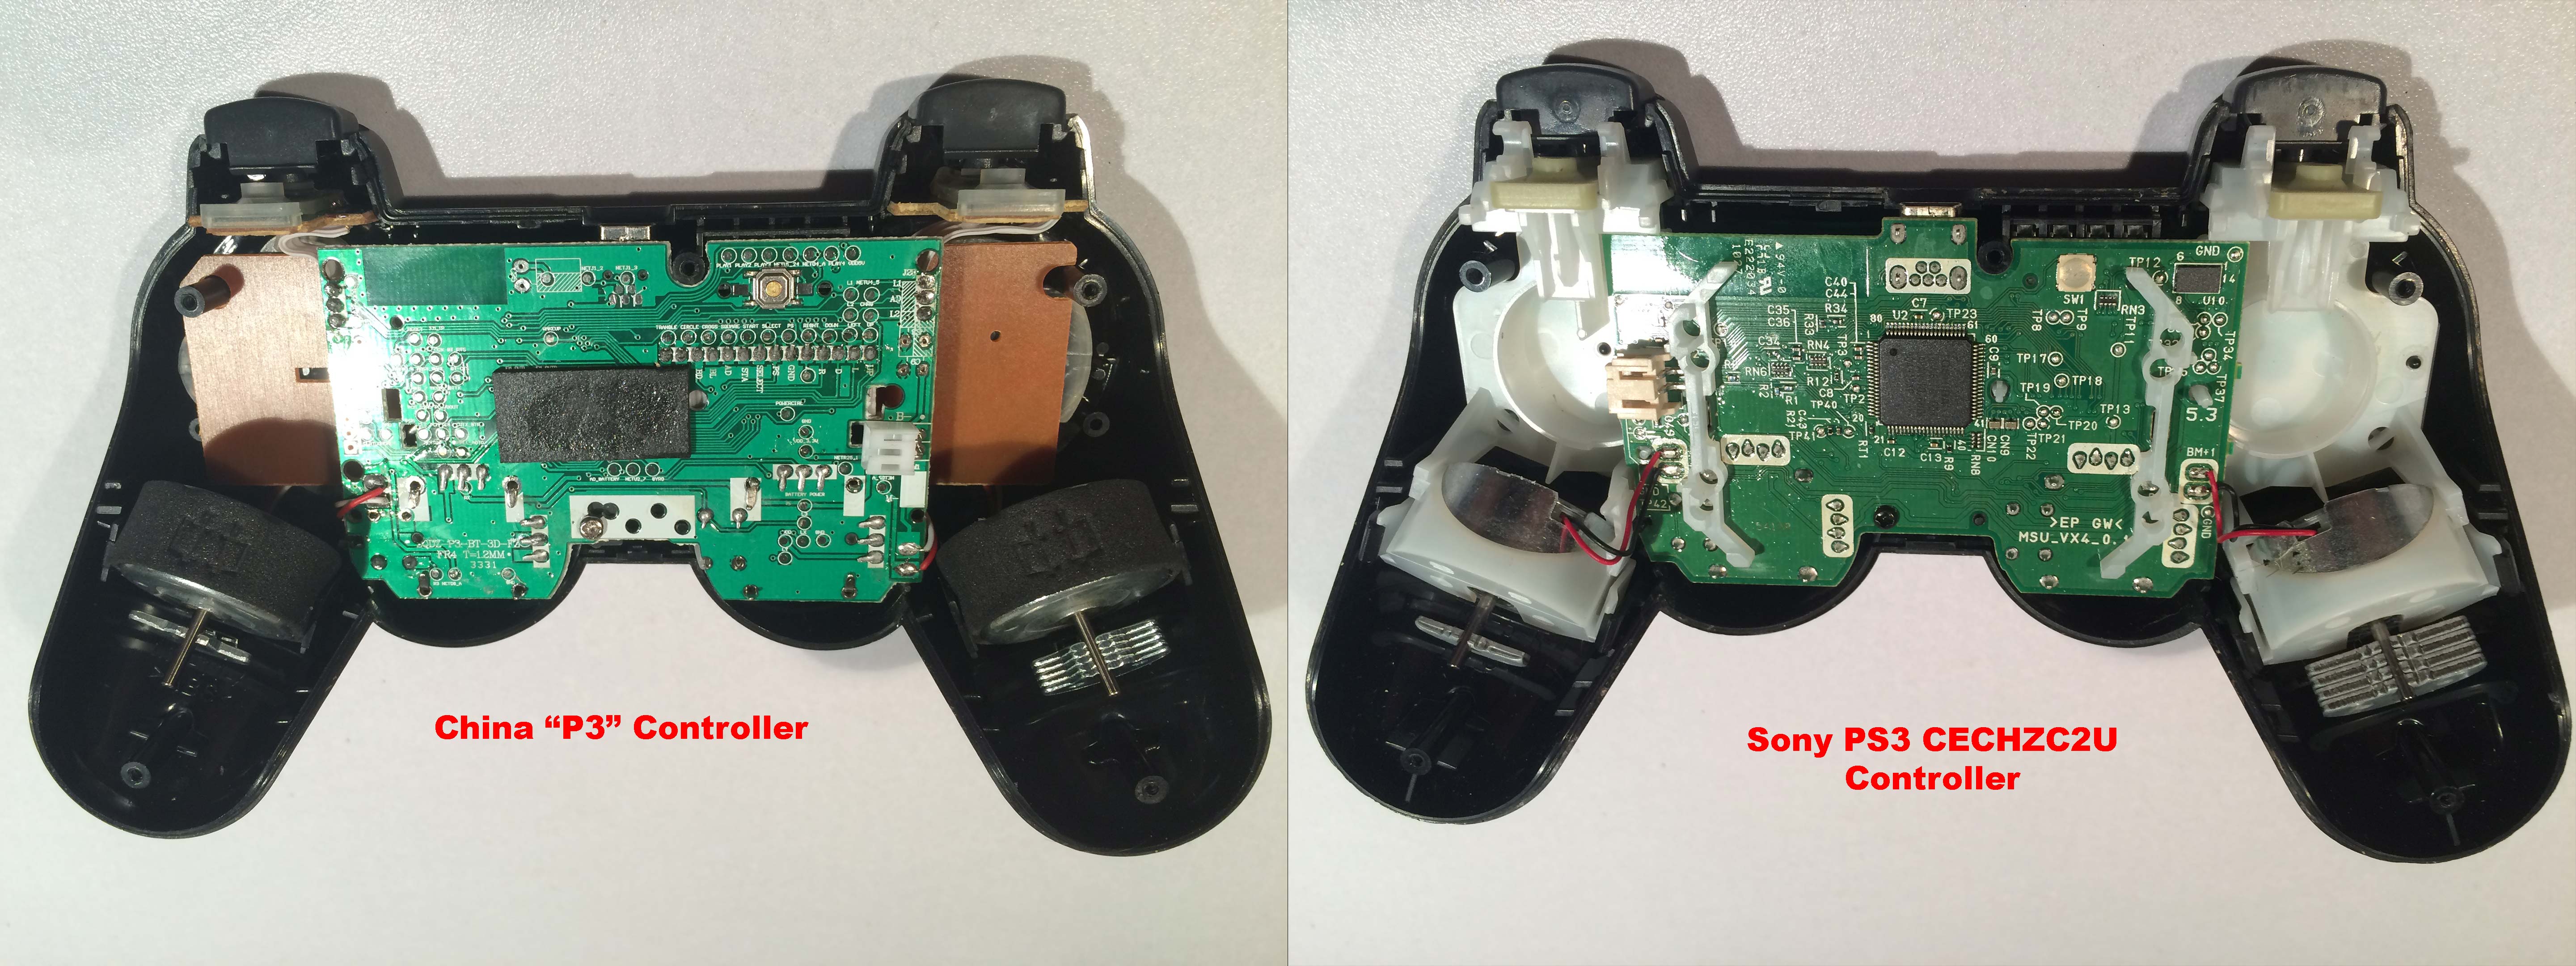 P3 vs PS3 controller - inside board view.